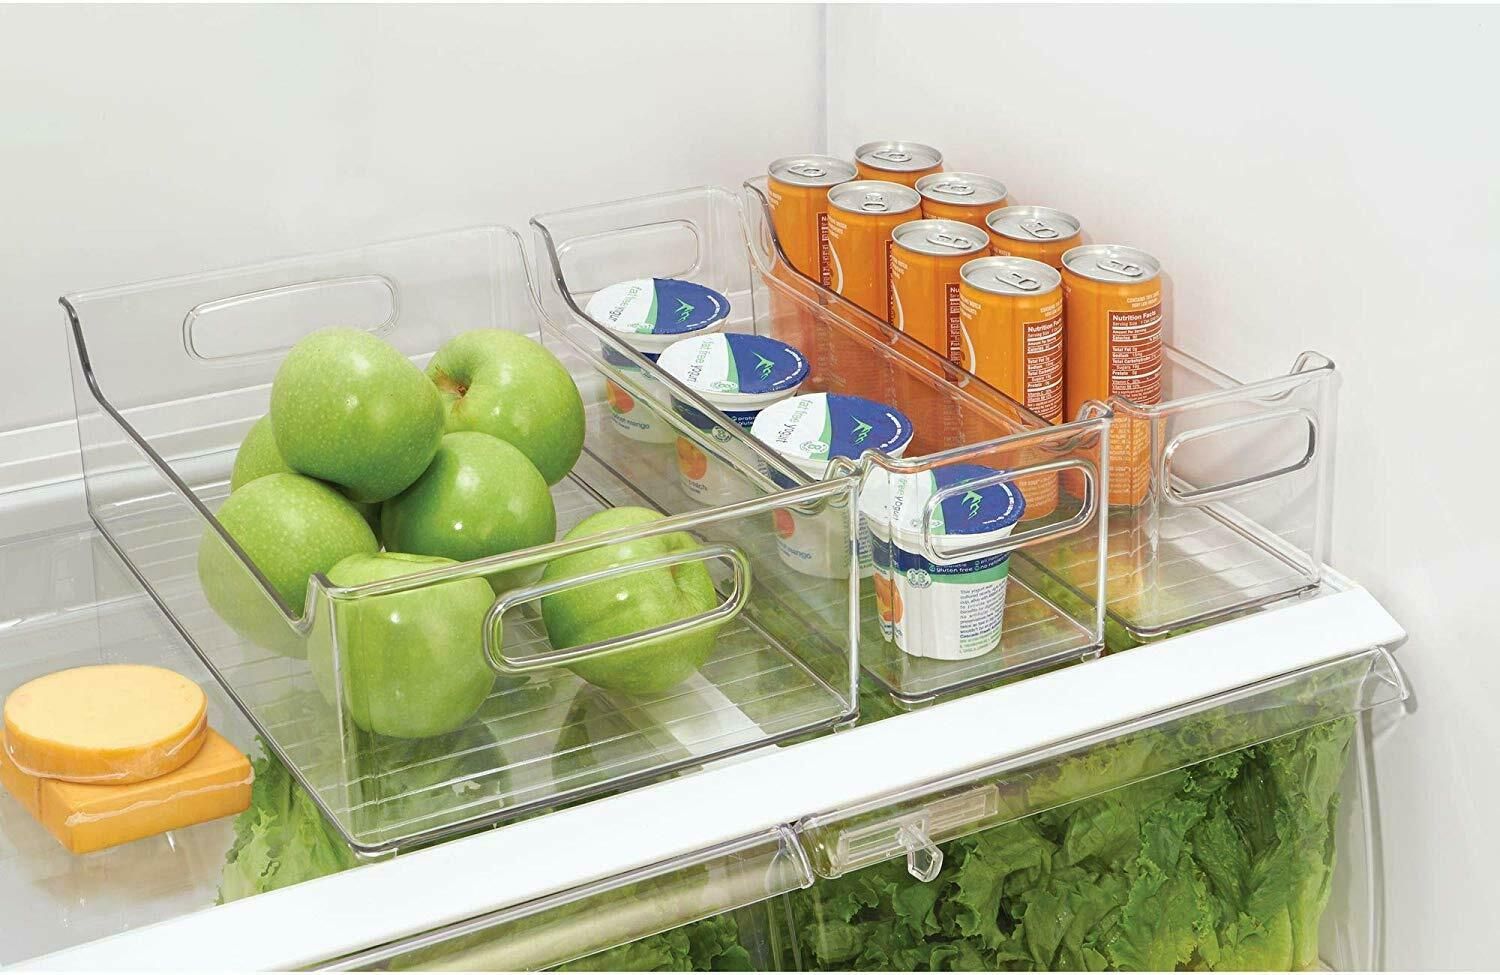 HOOJO Refrigerator Organizer Bins Review: The Ultimate Solution for Fridge,  Freezer, and Pantry Orga 